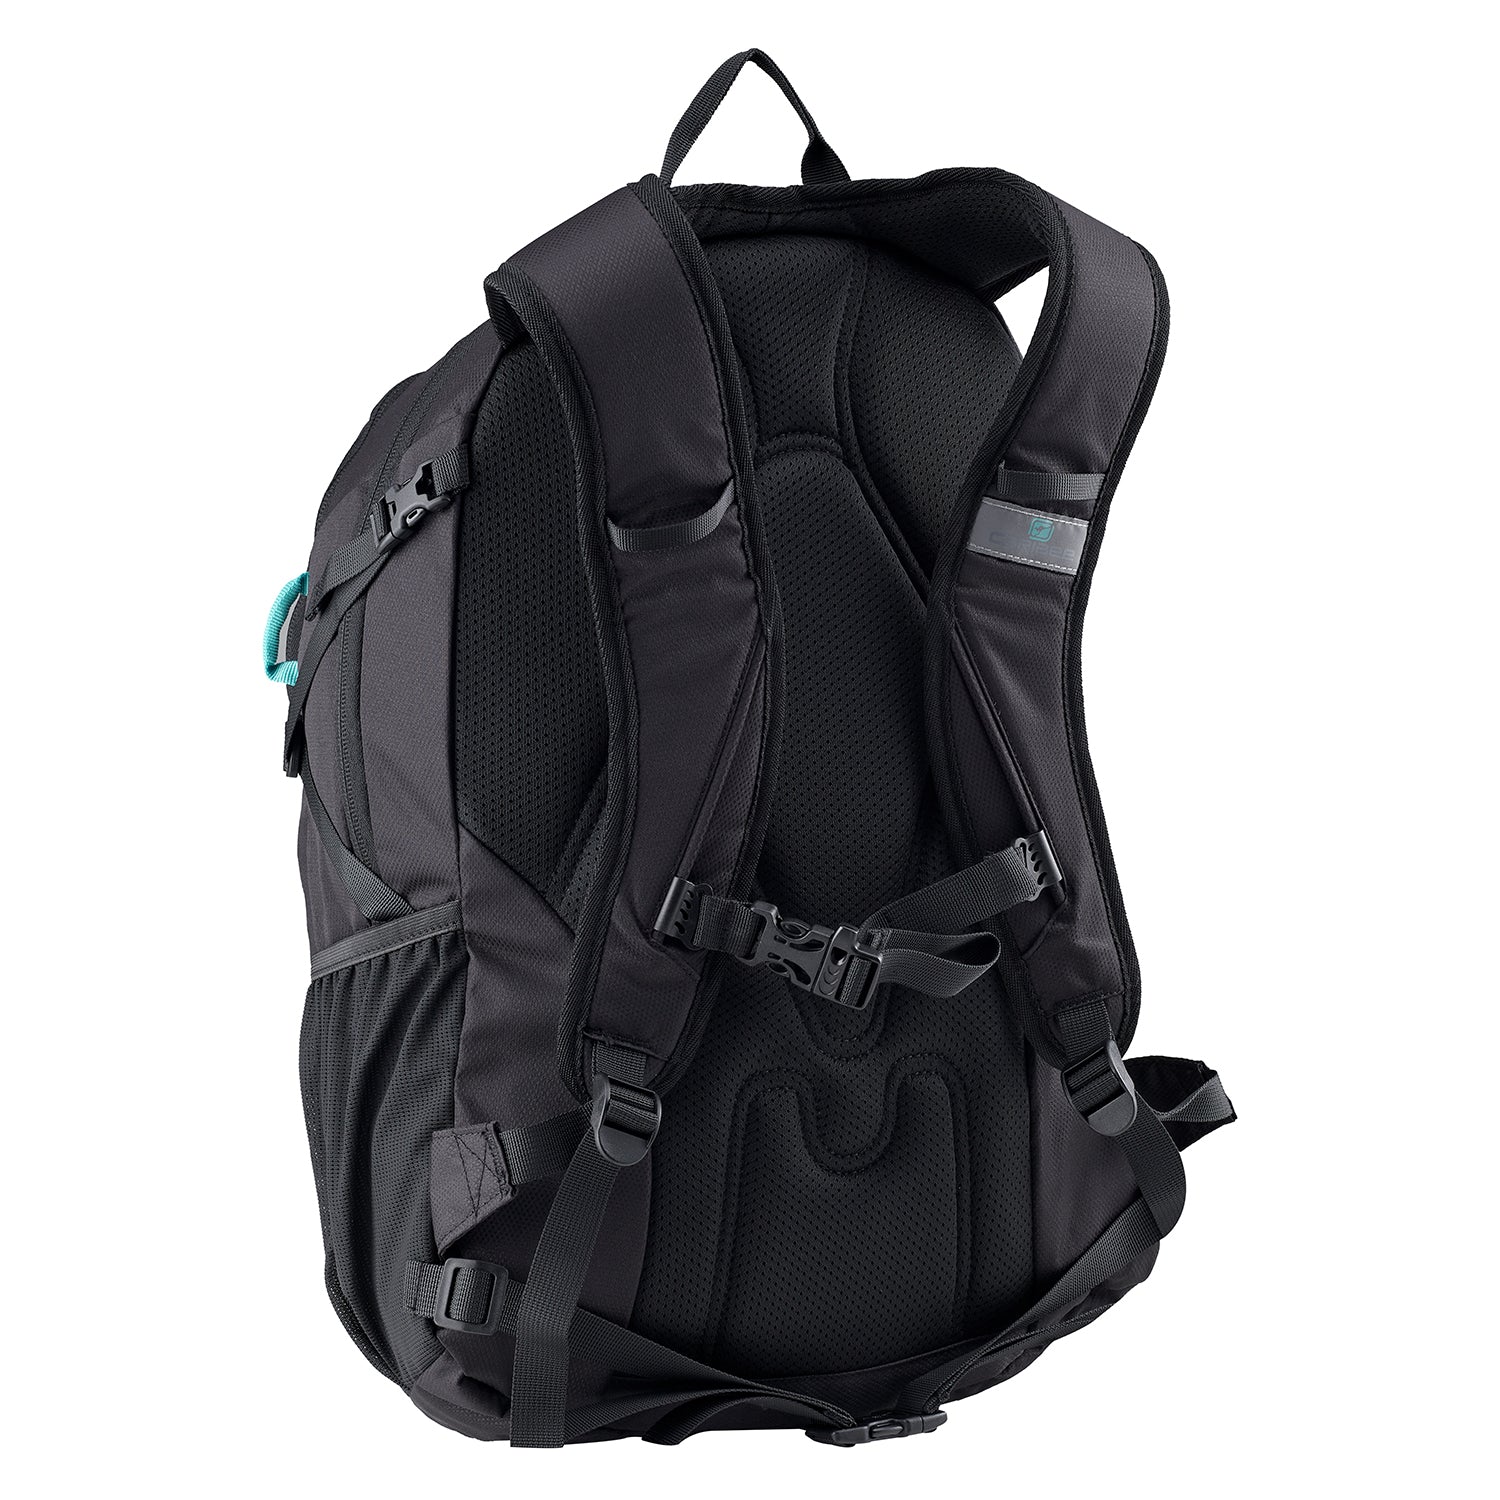 Caribee X-Trek 28 backpack - Black/Alligator Green back system